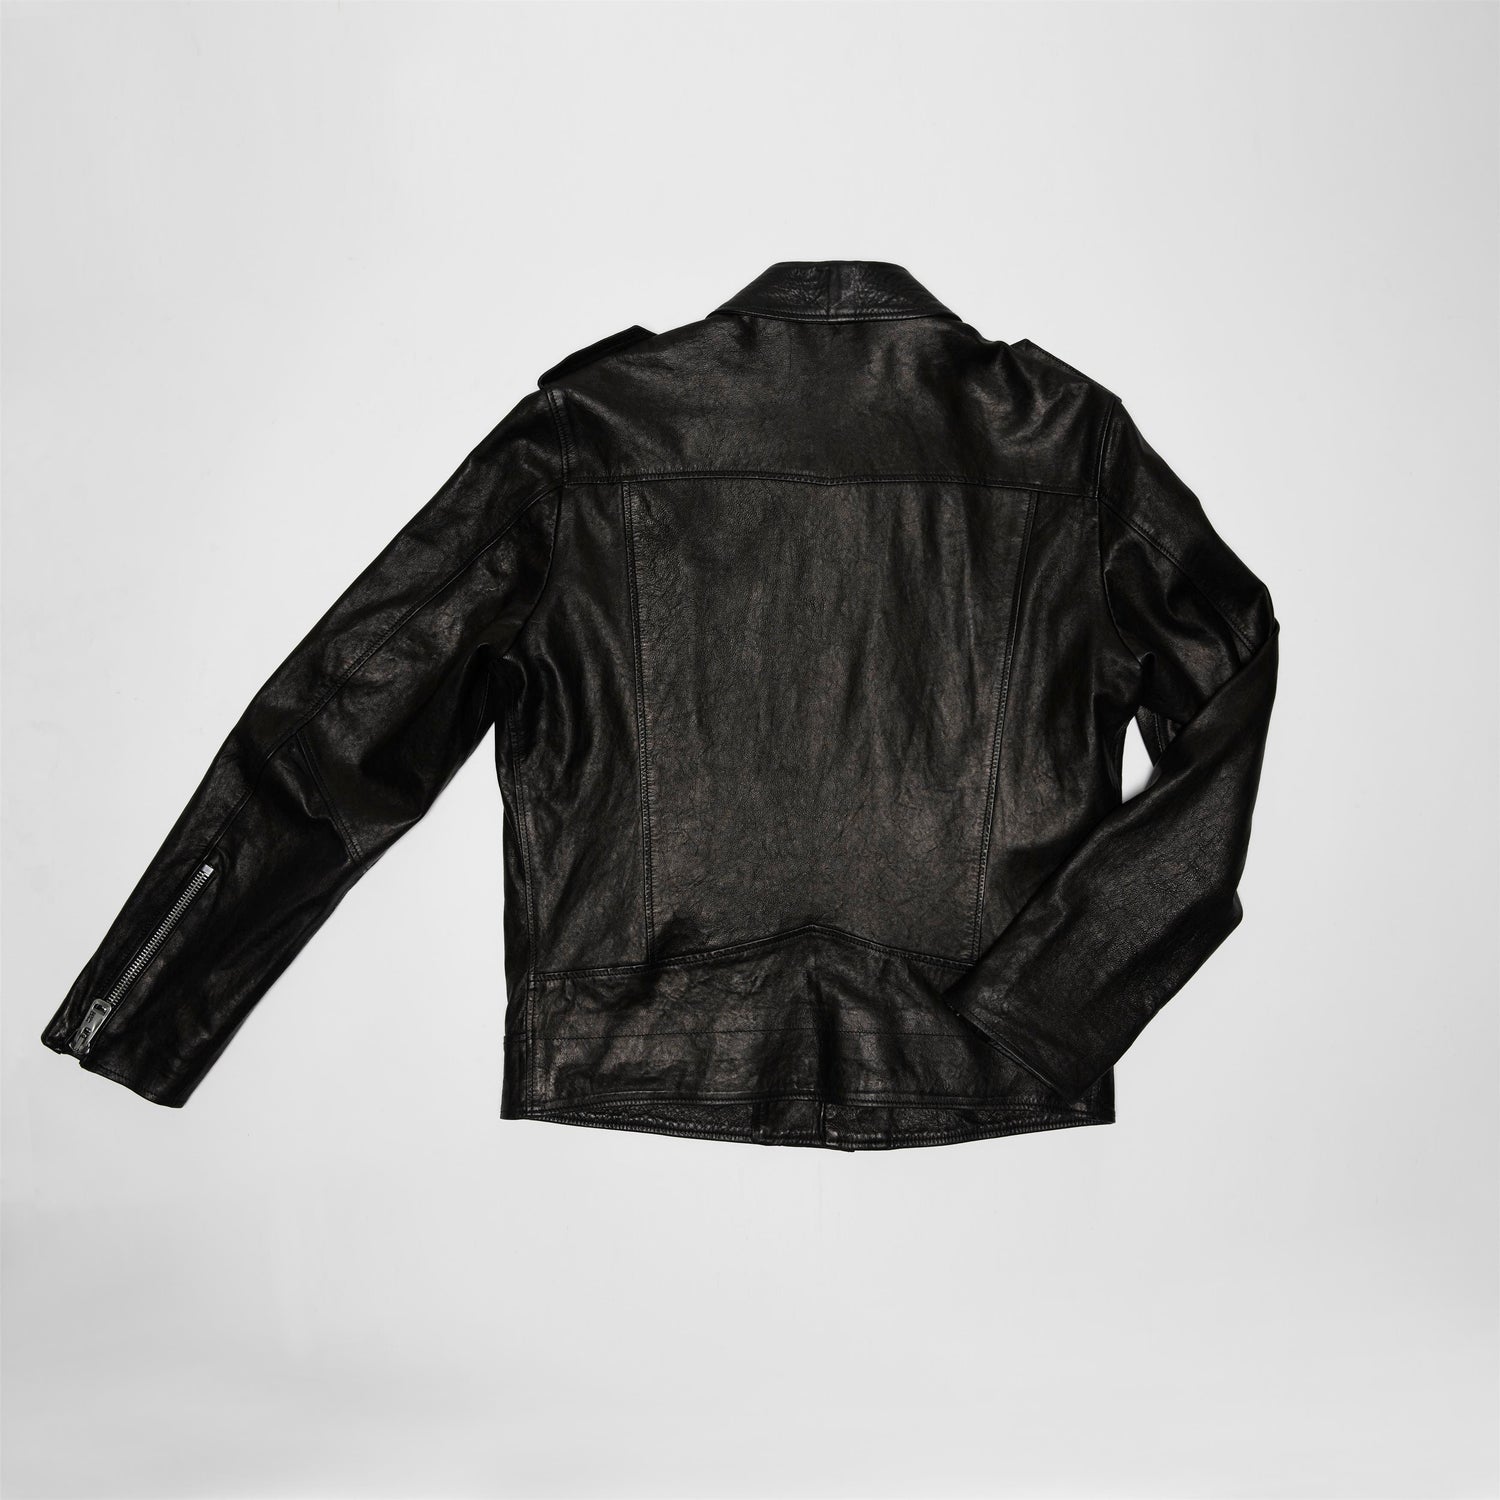 A.S.98 Leather Jacket - Jimmy - A.S. 98 - 